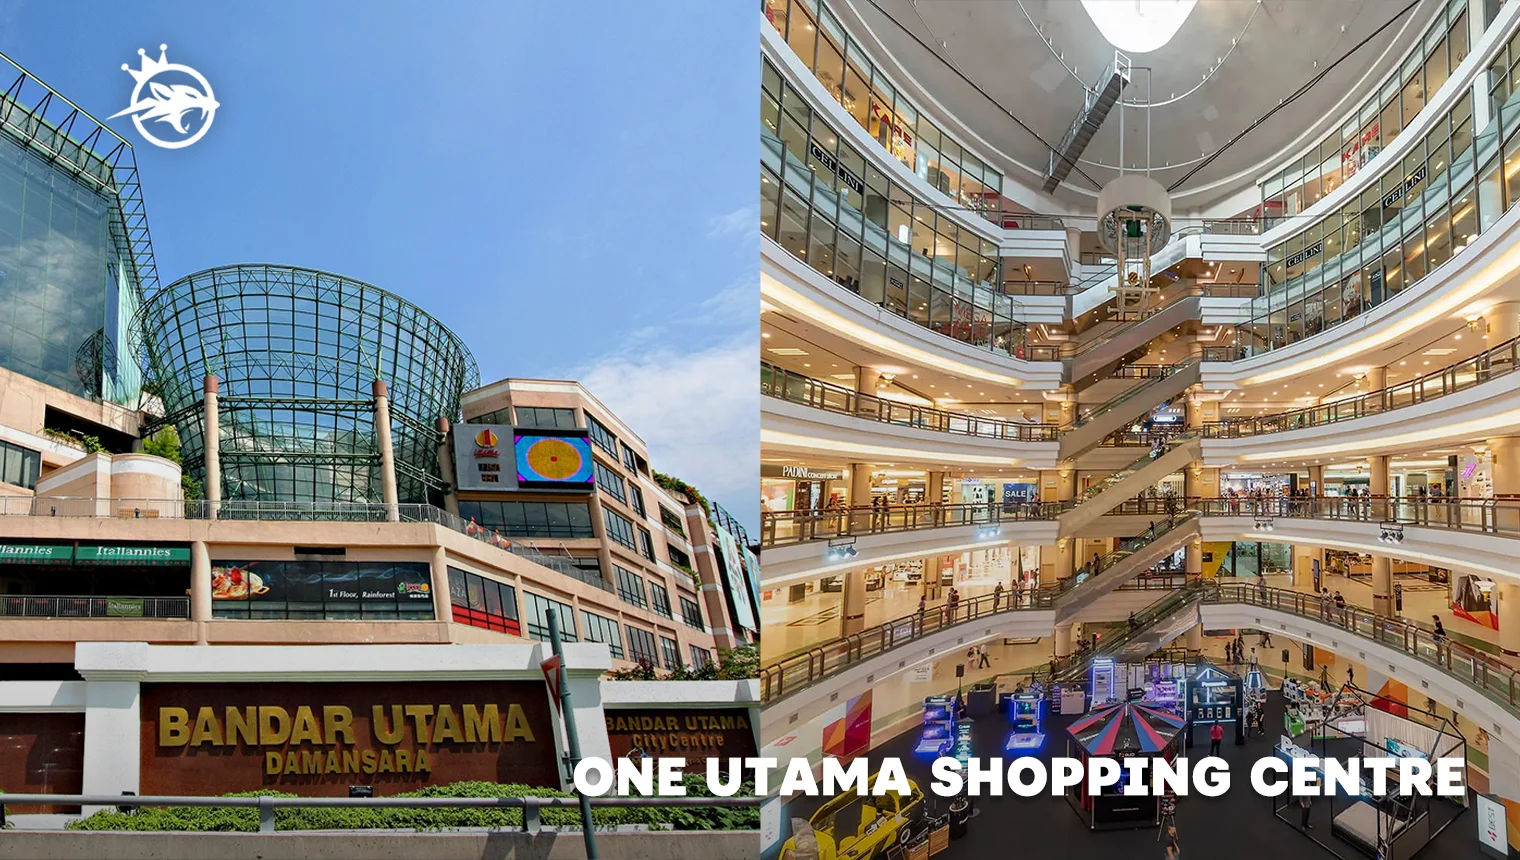 One Utama Shopping Centre